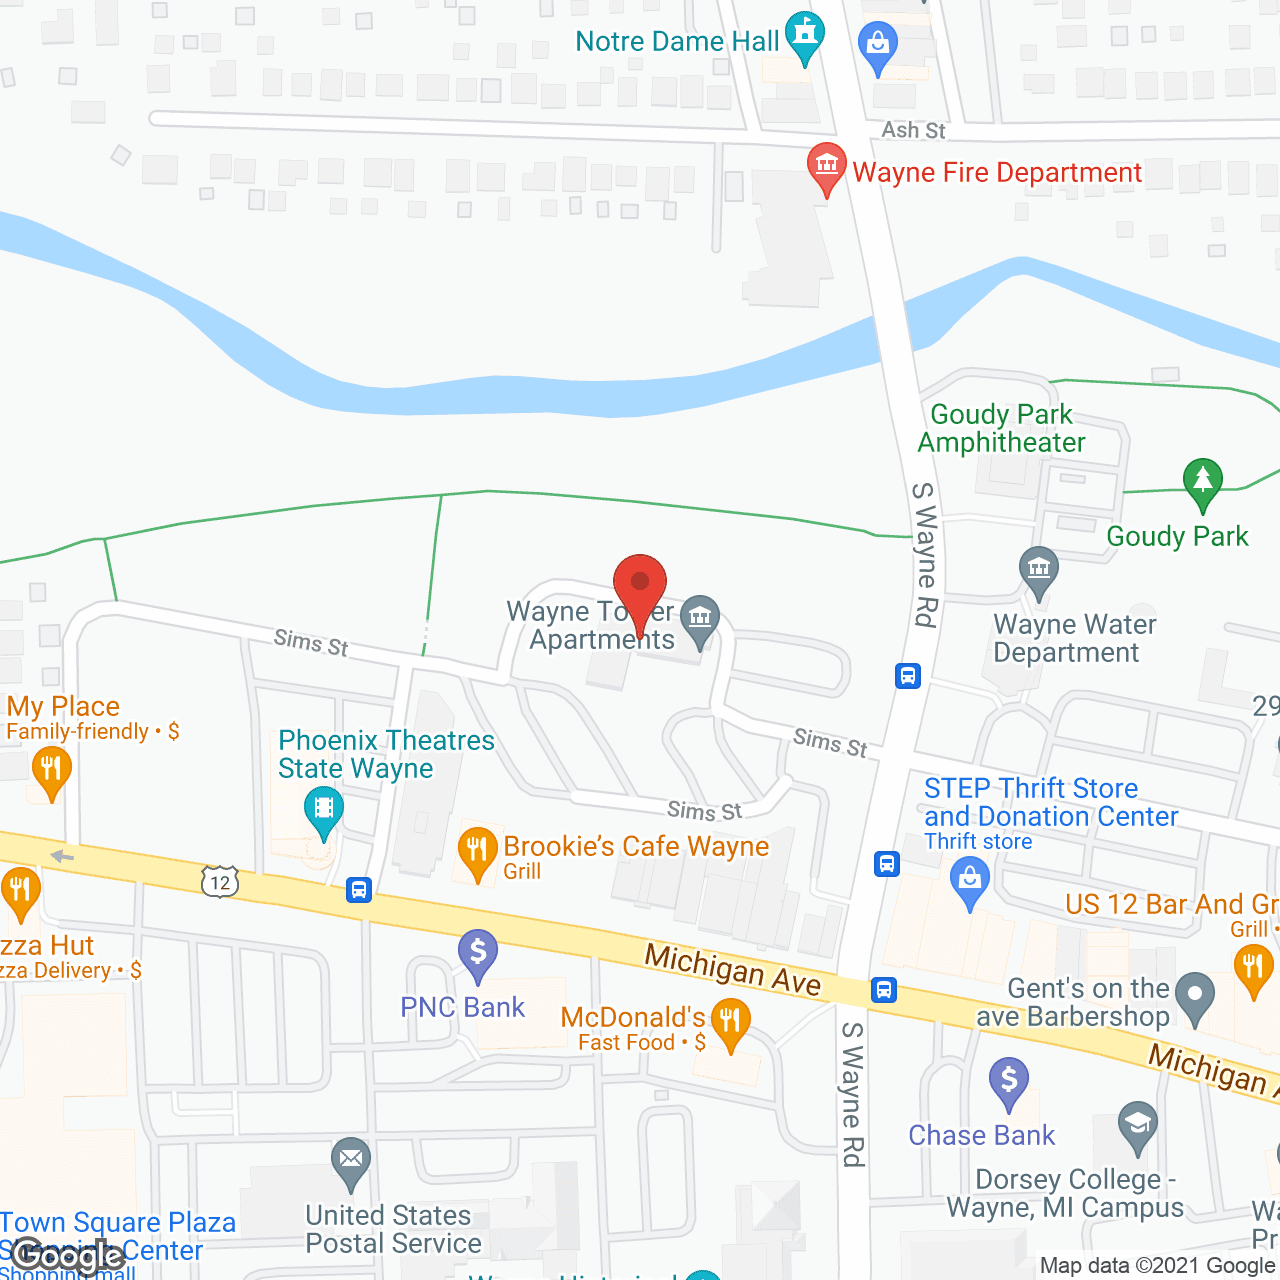 Wayne Tower Apartments in google map